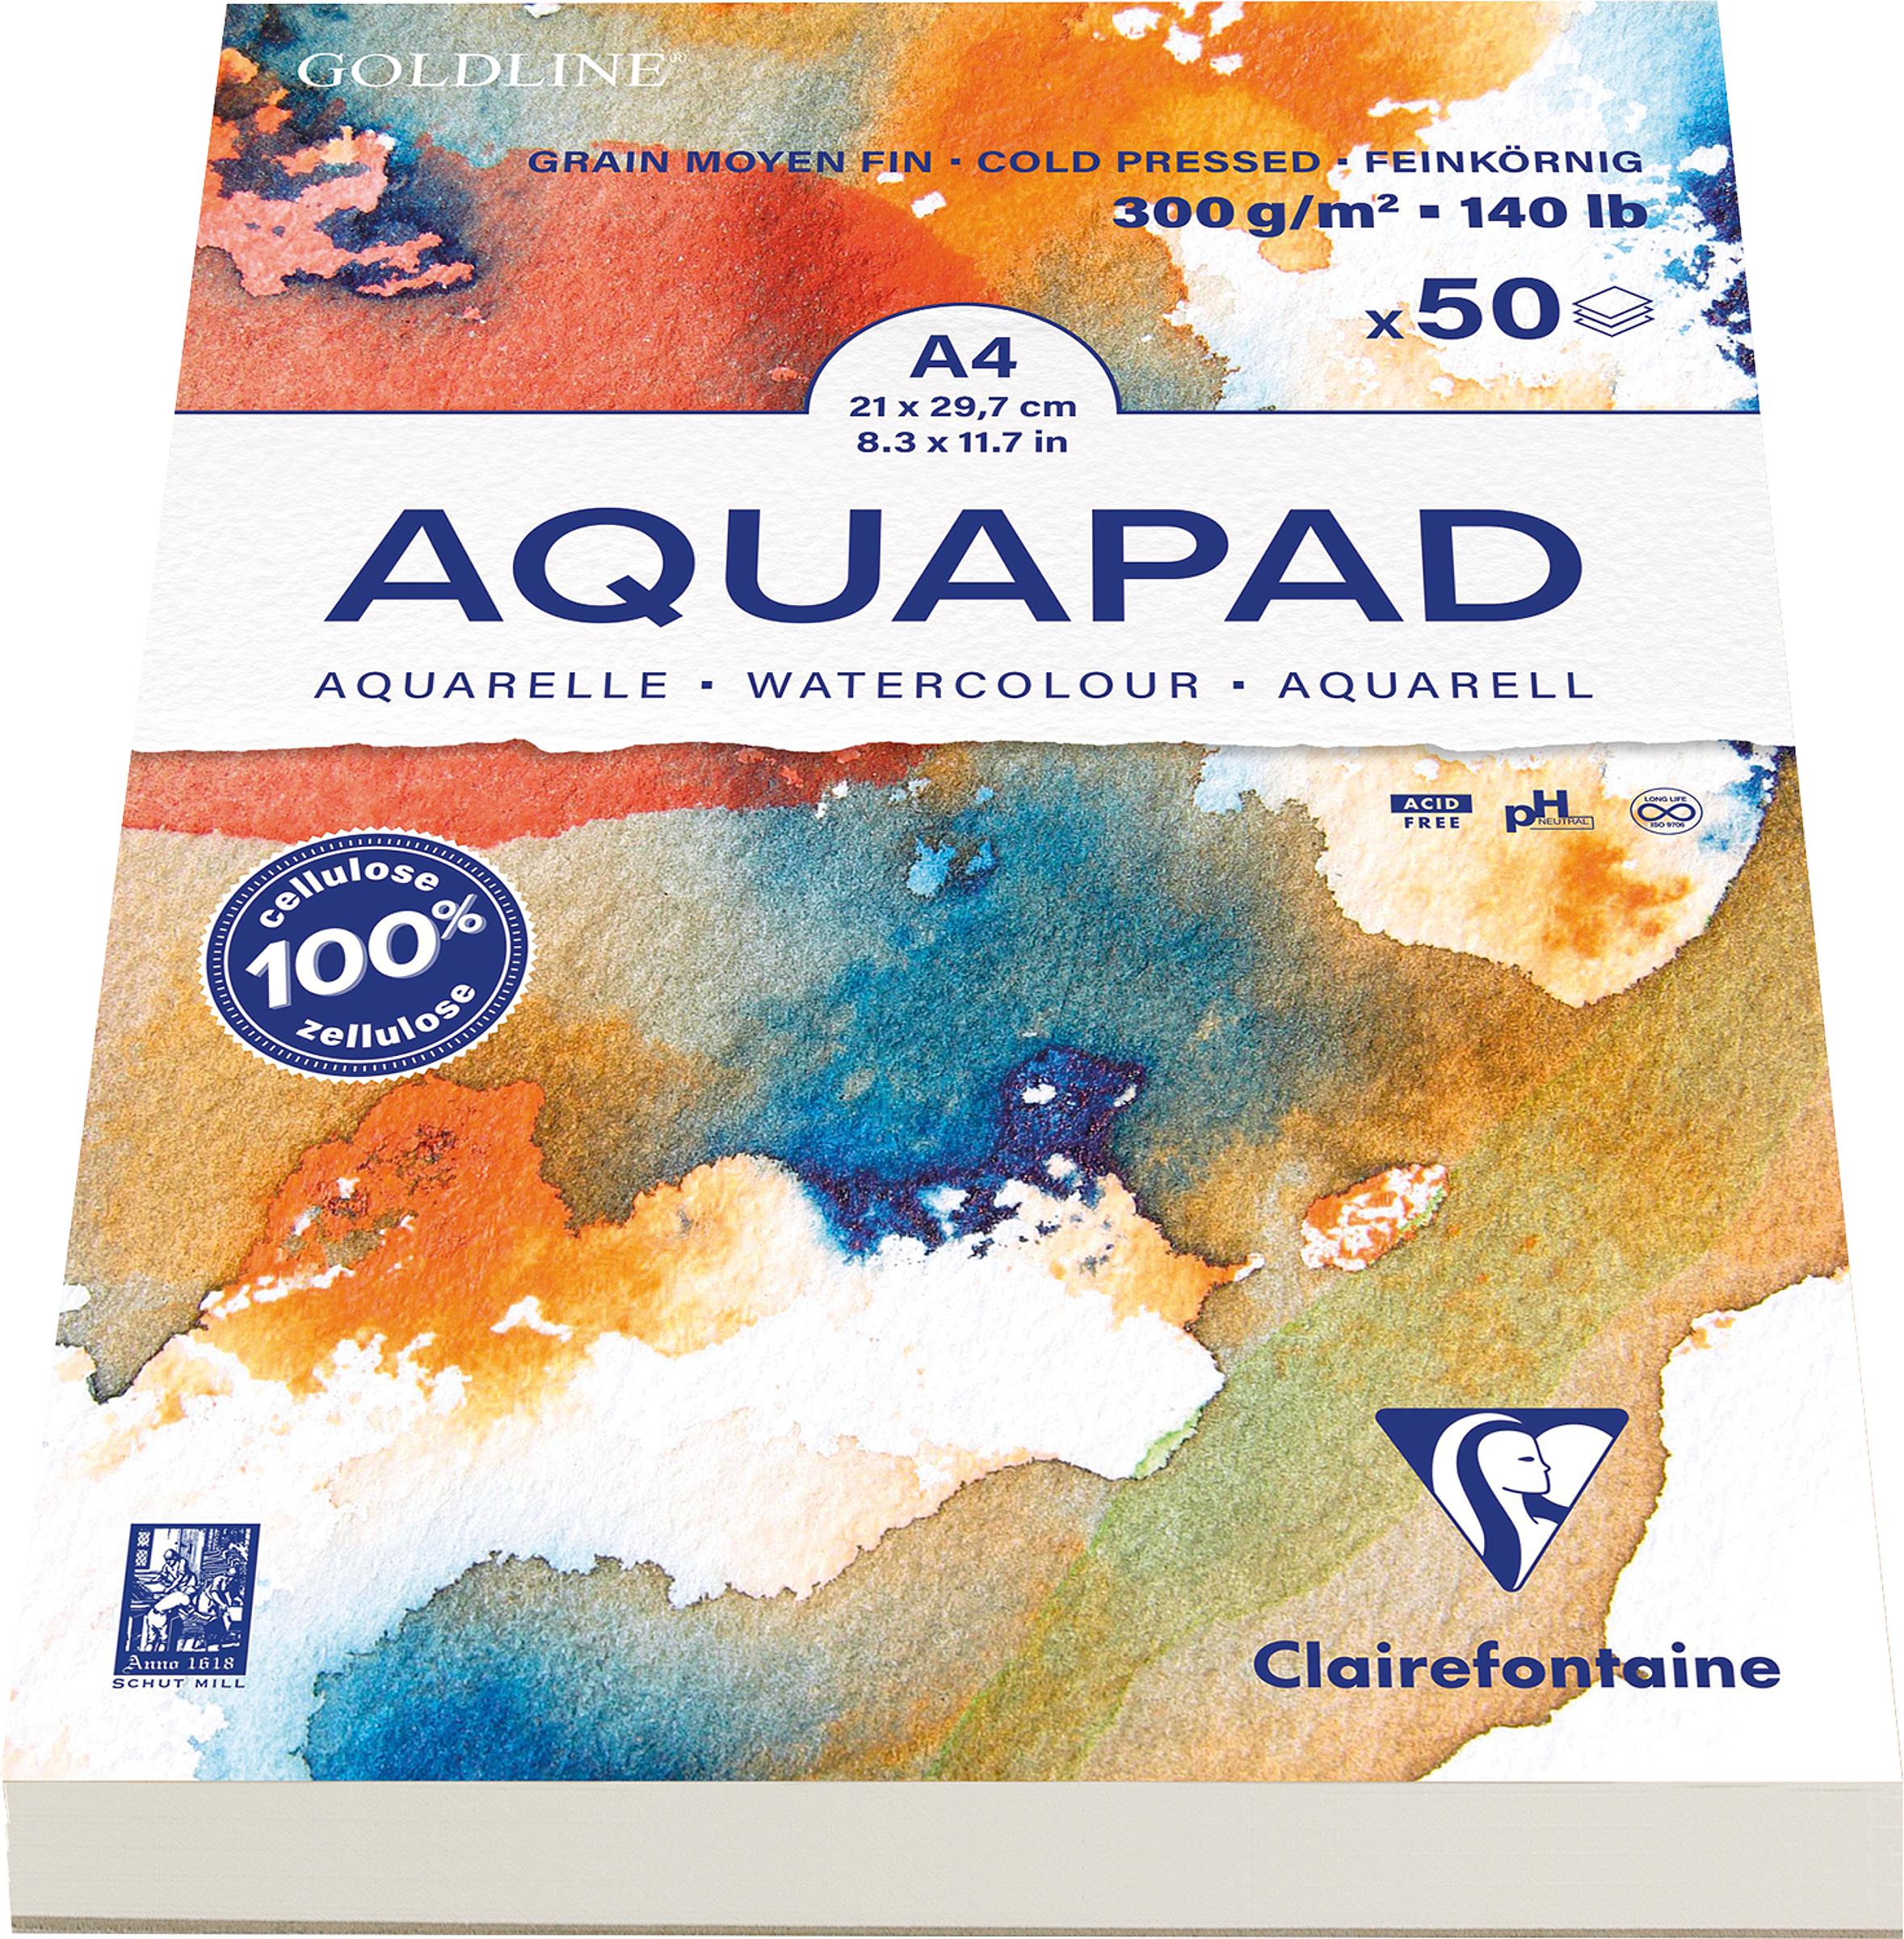 Papier aquarelle Clairefontaine GOLDLINE AQUAPAD 300 g